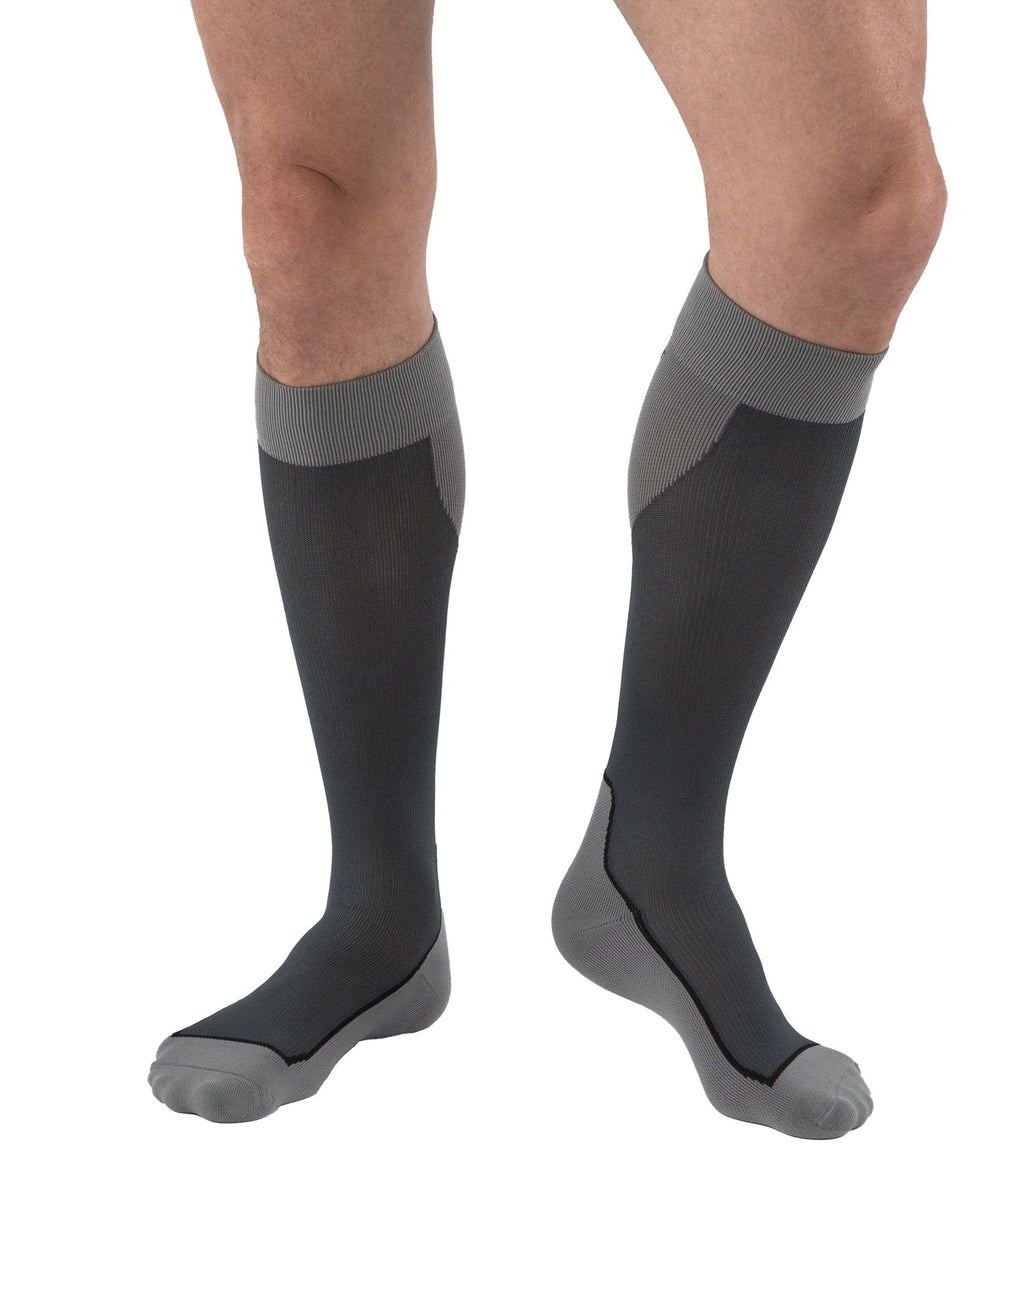 [Australia] - JOBST - 7528912 Sport Knee High 15-20 mmHg Compression Socks, Black/Grey, Large Grey 